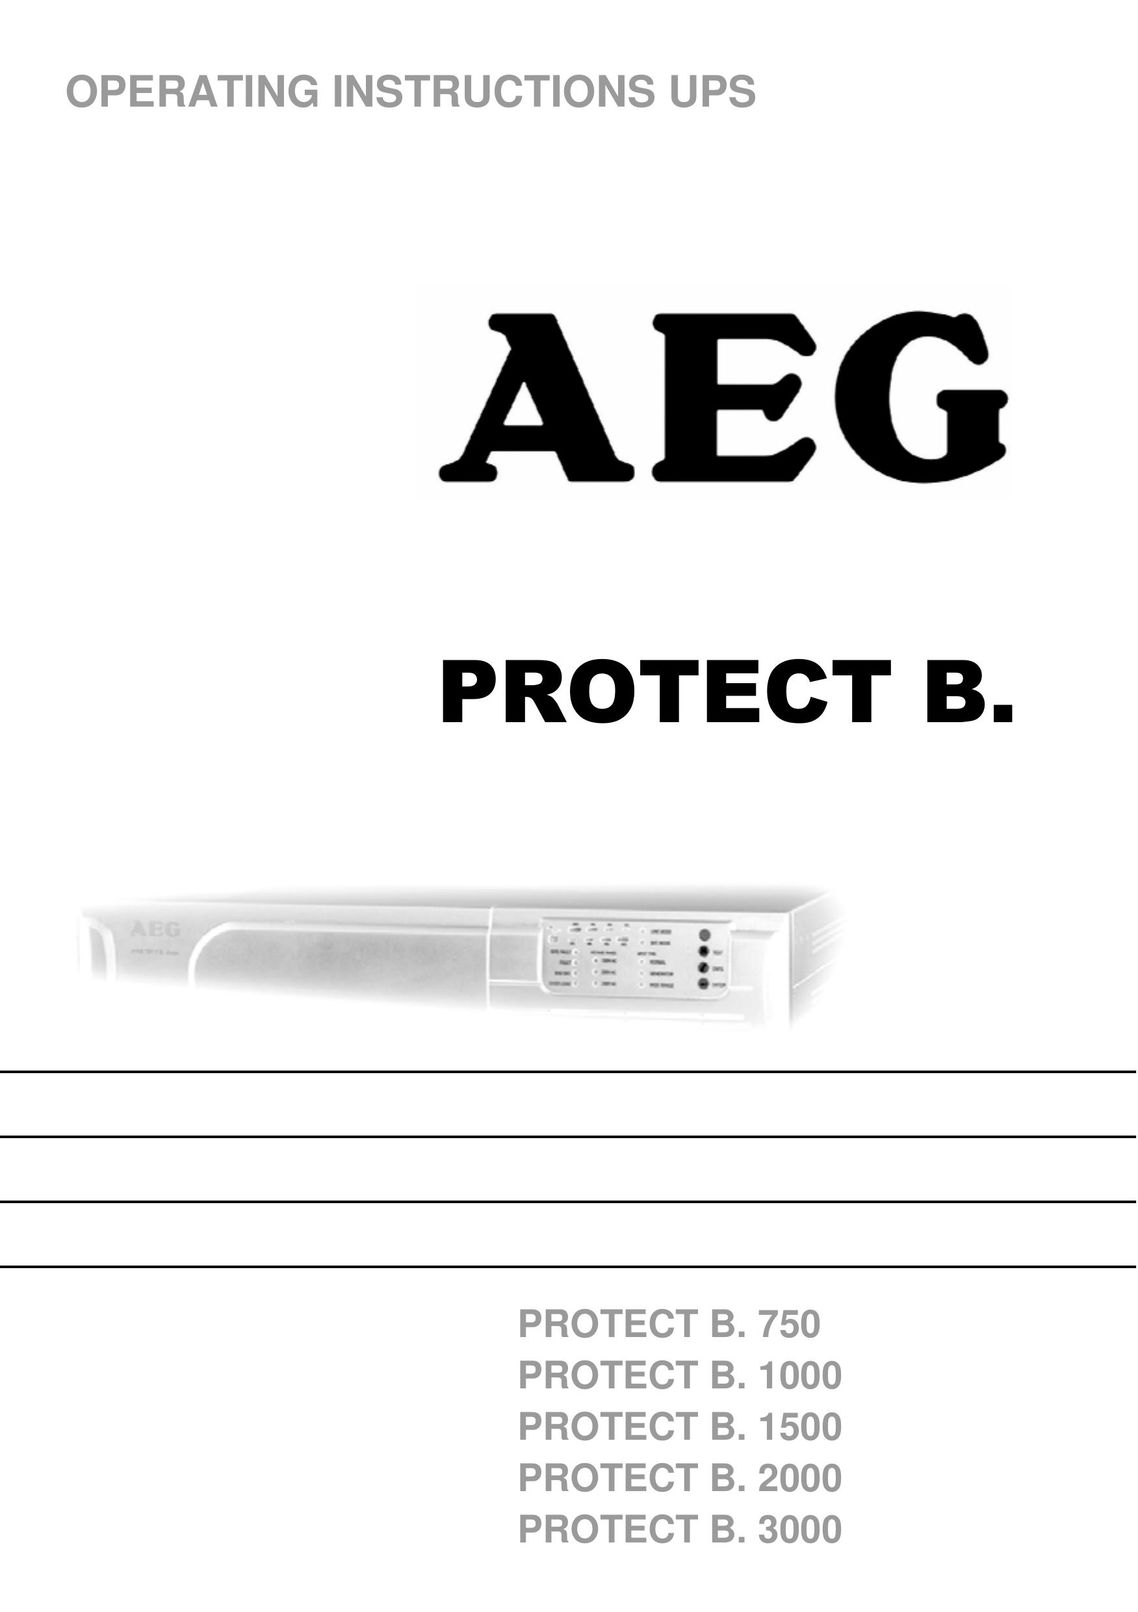 AEG PROTECT B. 1500 Power Supply User Manual